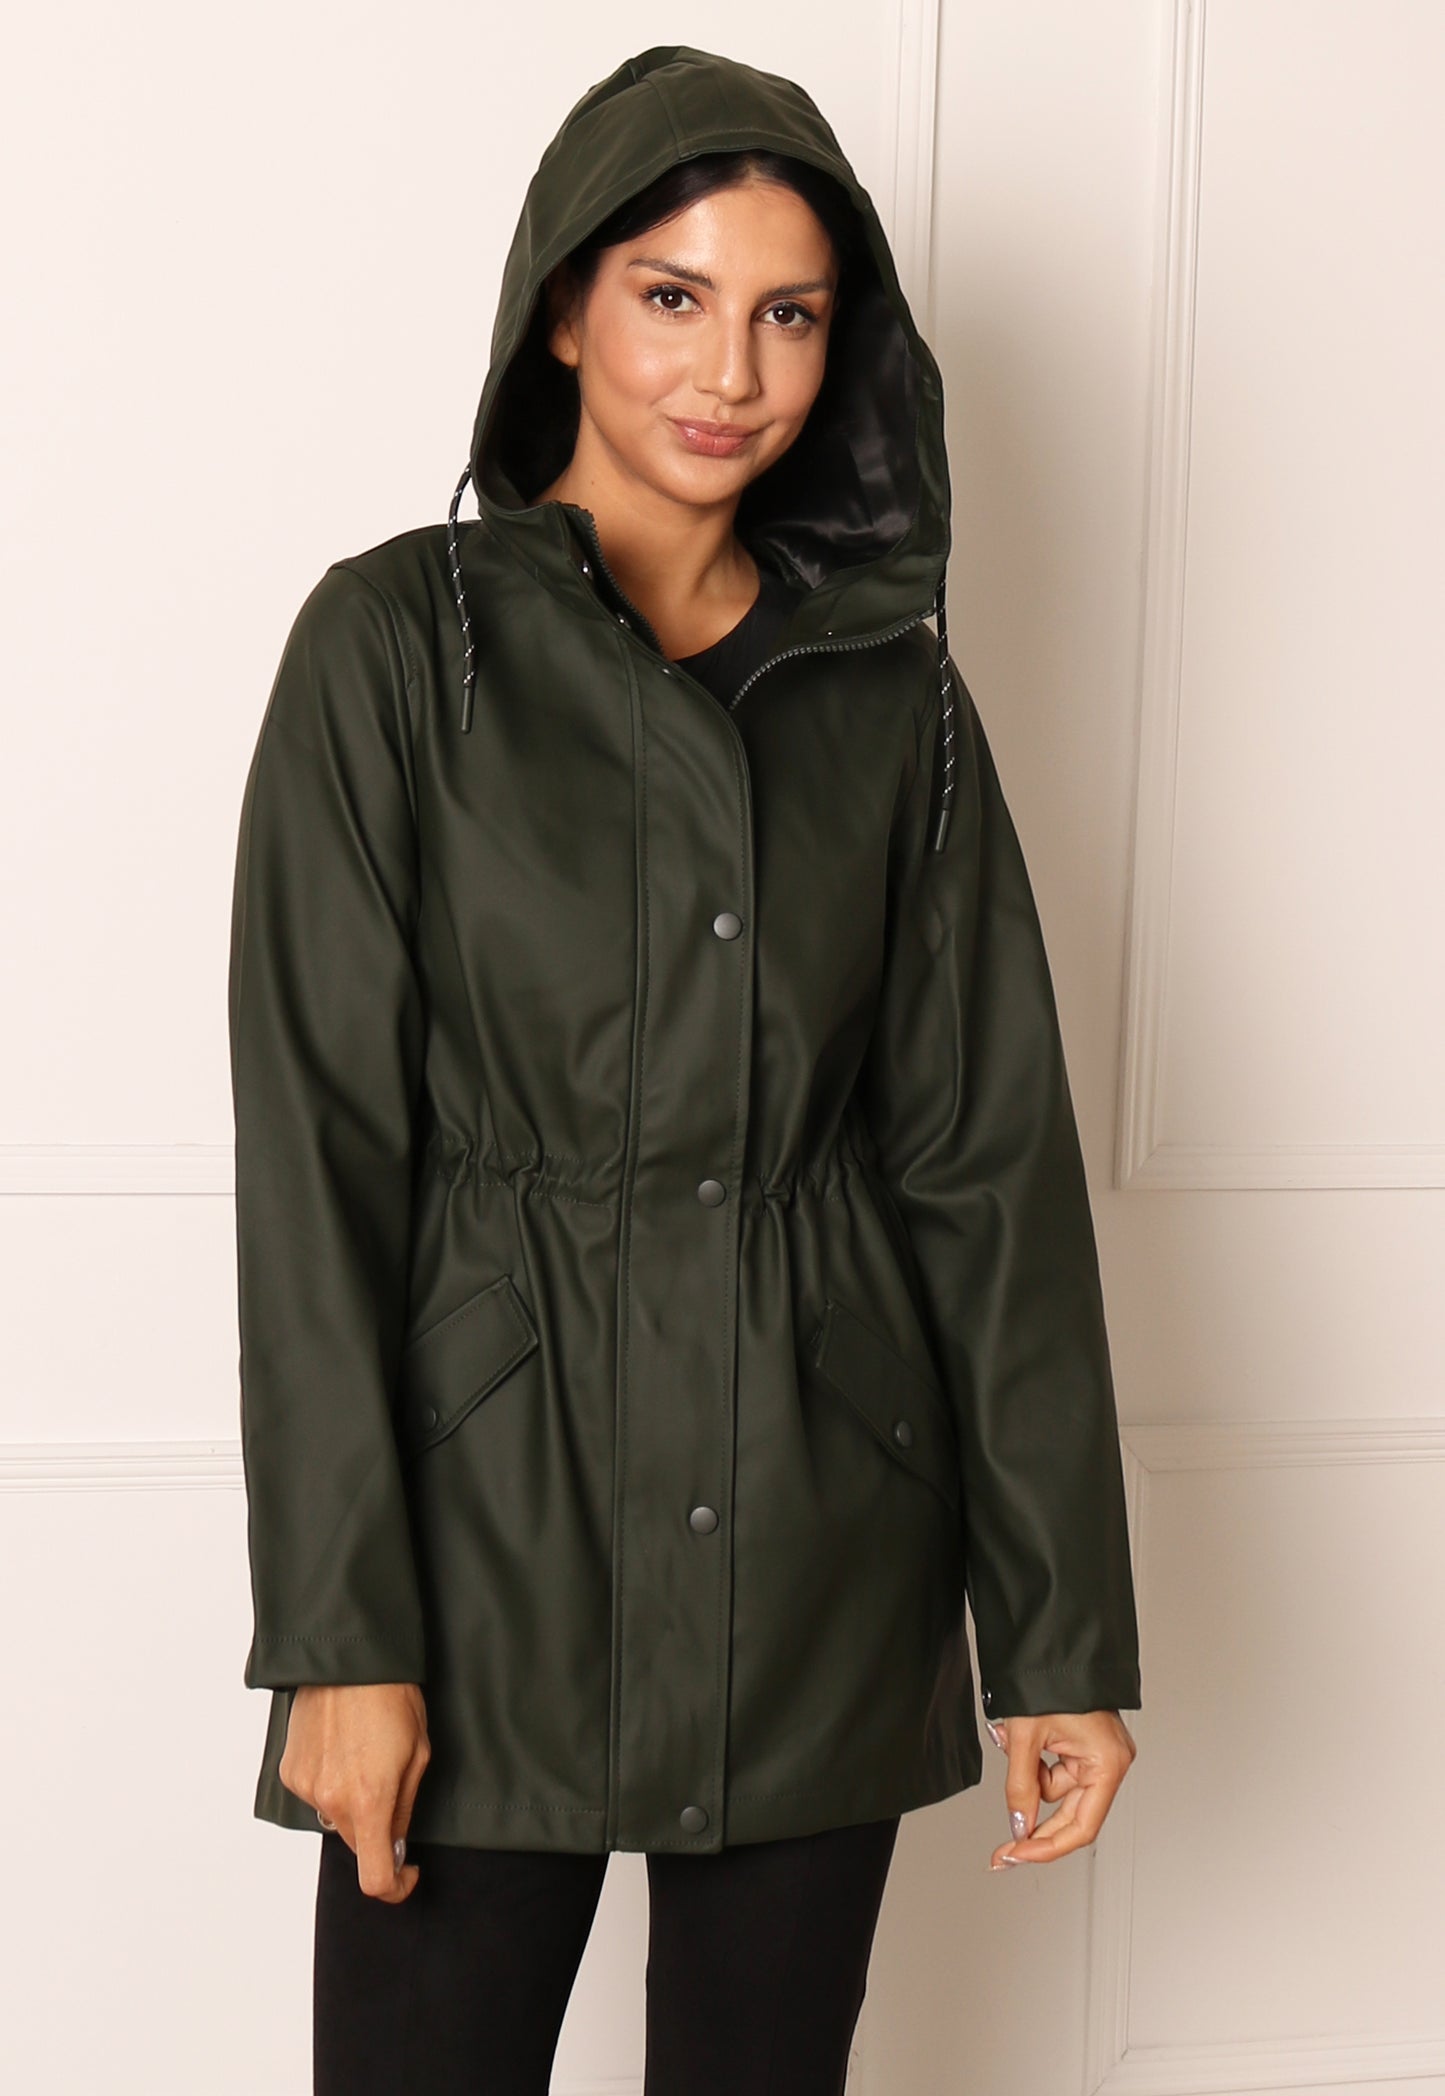 VERO MODA Lou Rubberised Matte Hooded Raincoat Mac in Khaki | One Clothing MODA Khaki Green Matte Hooded Waterproof Raincoat Anorak